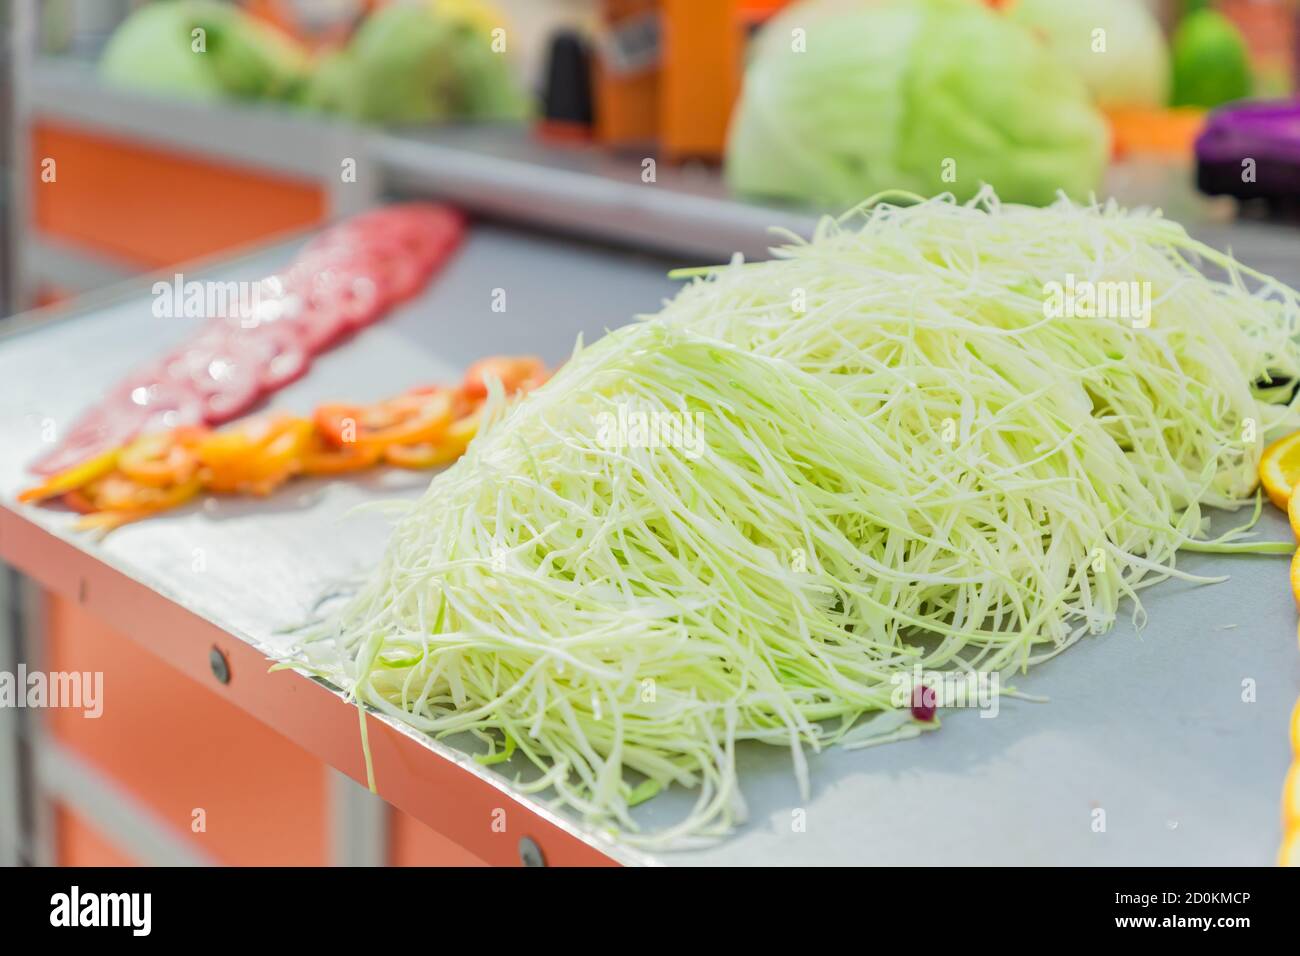 https://c8.alamy.com/comp/2D0KMCP/fresh-green-shredded-cabbage-on-the-table-vegetable-shredder-presentation-2D0KMCP.jpg